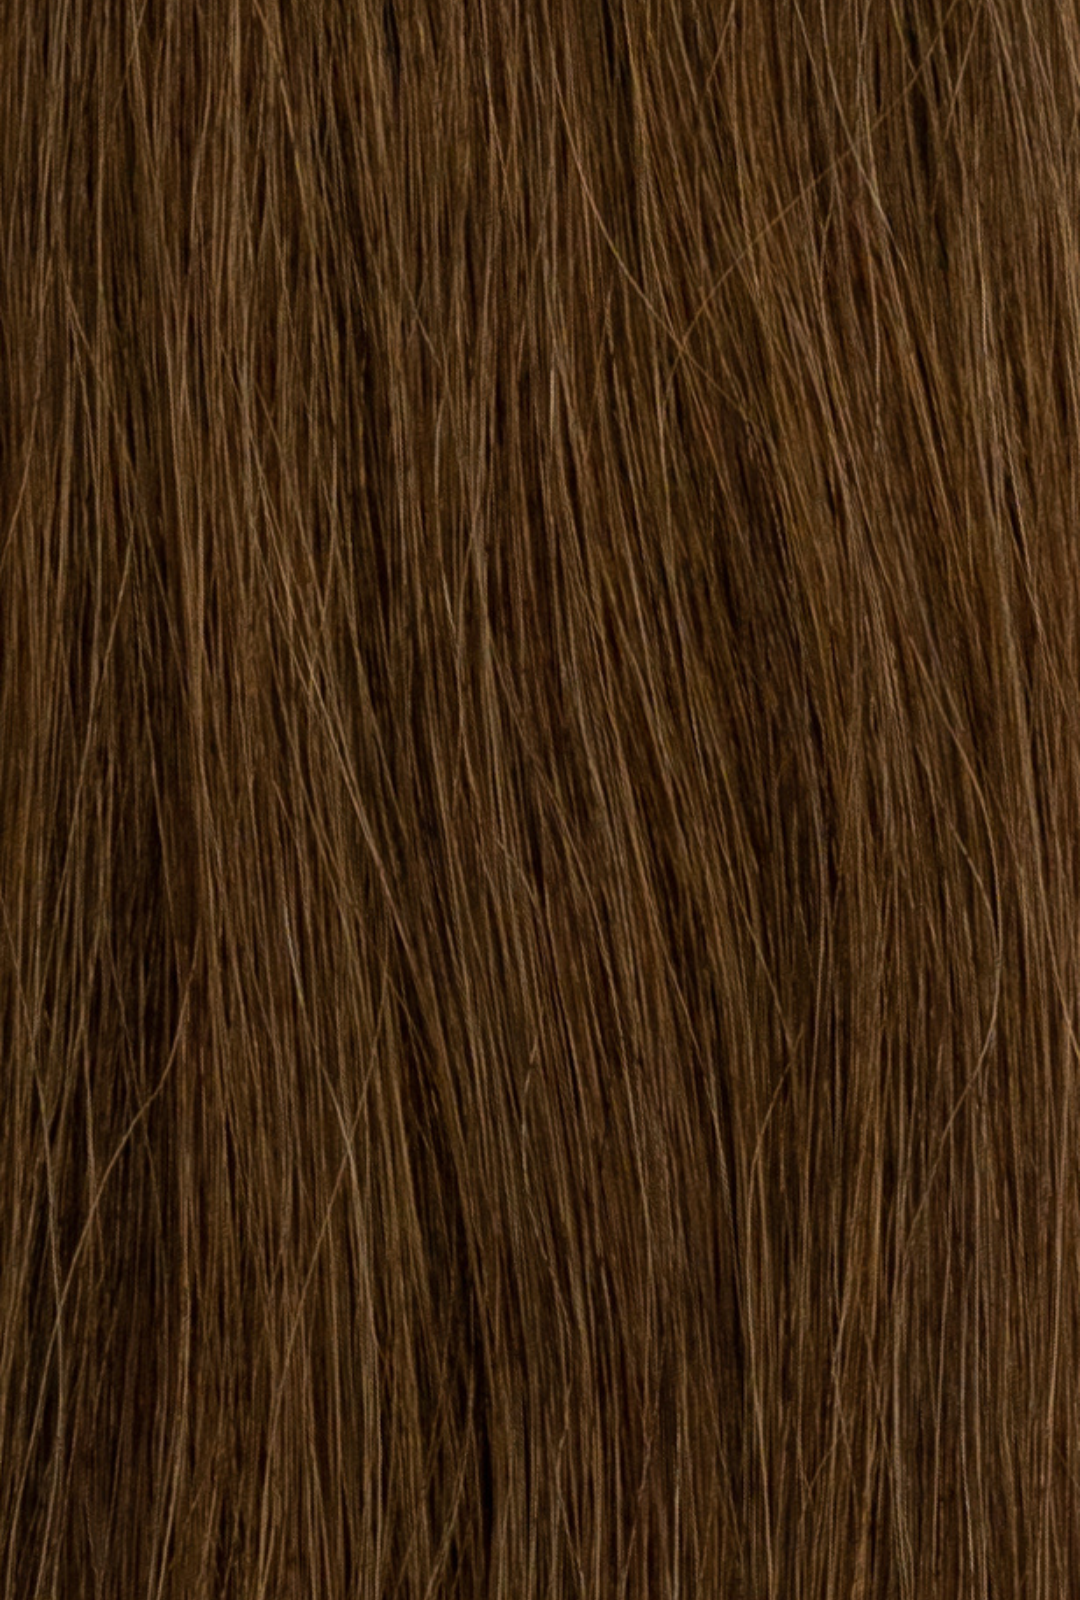 Laced Hair Keratin Bond Extensions #5 (Caramel)